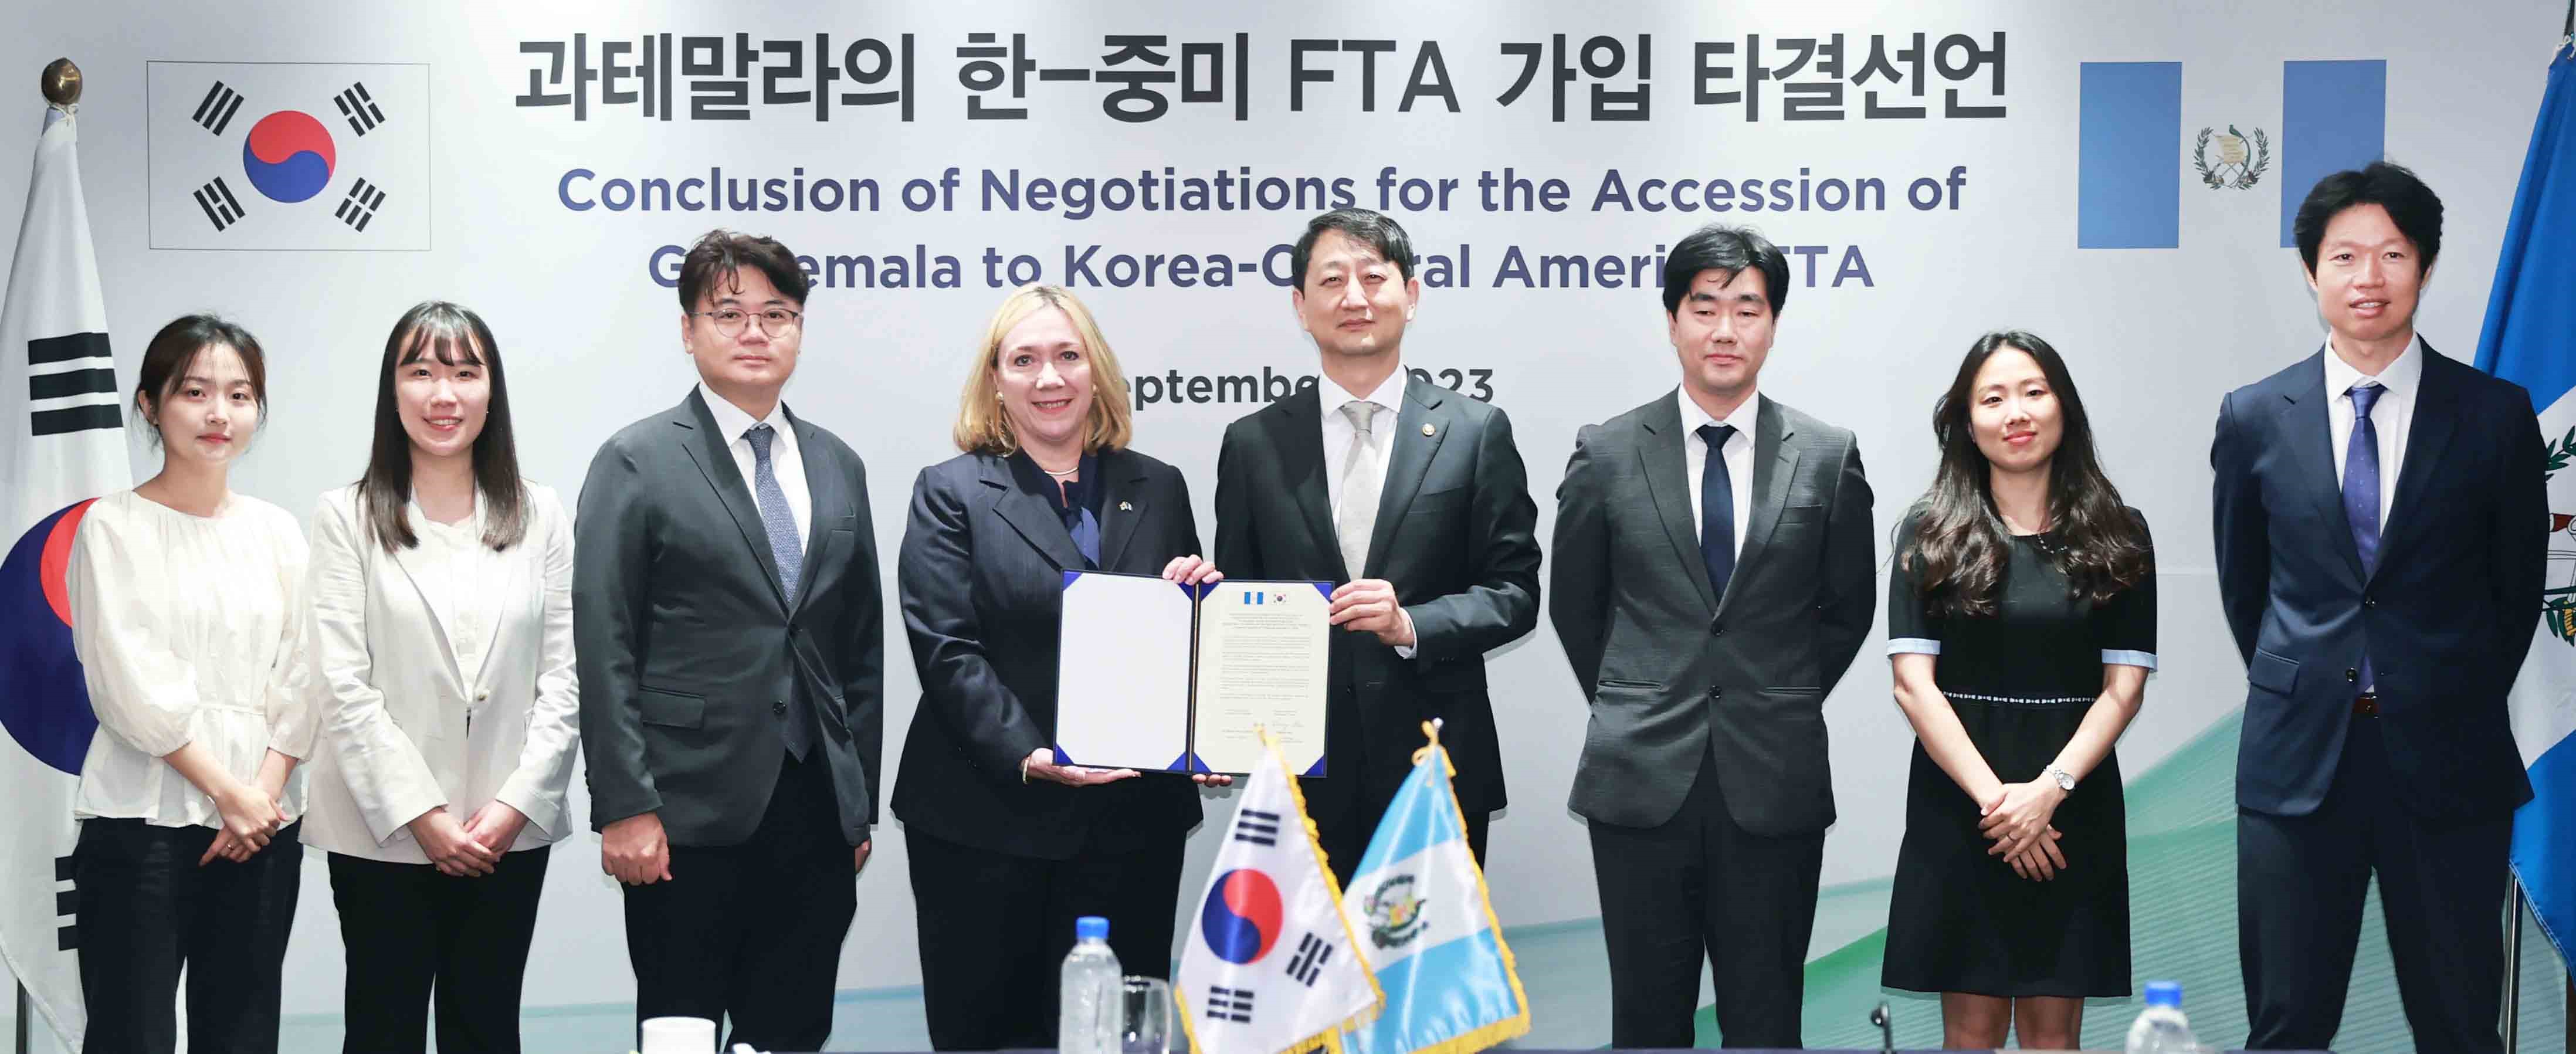 Korea and Guatemala conclude Korea-Central America FTA membership negotiations Image 0